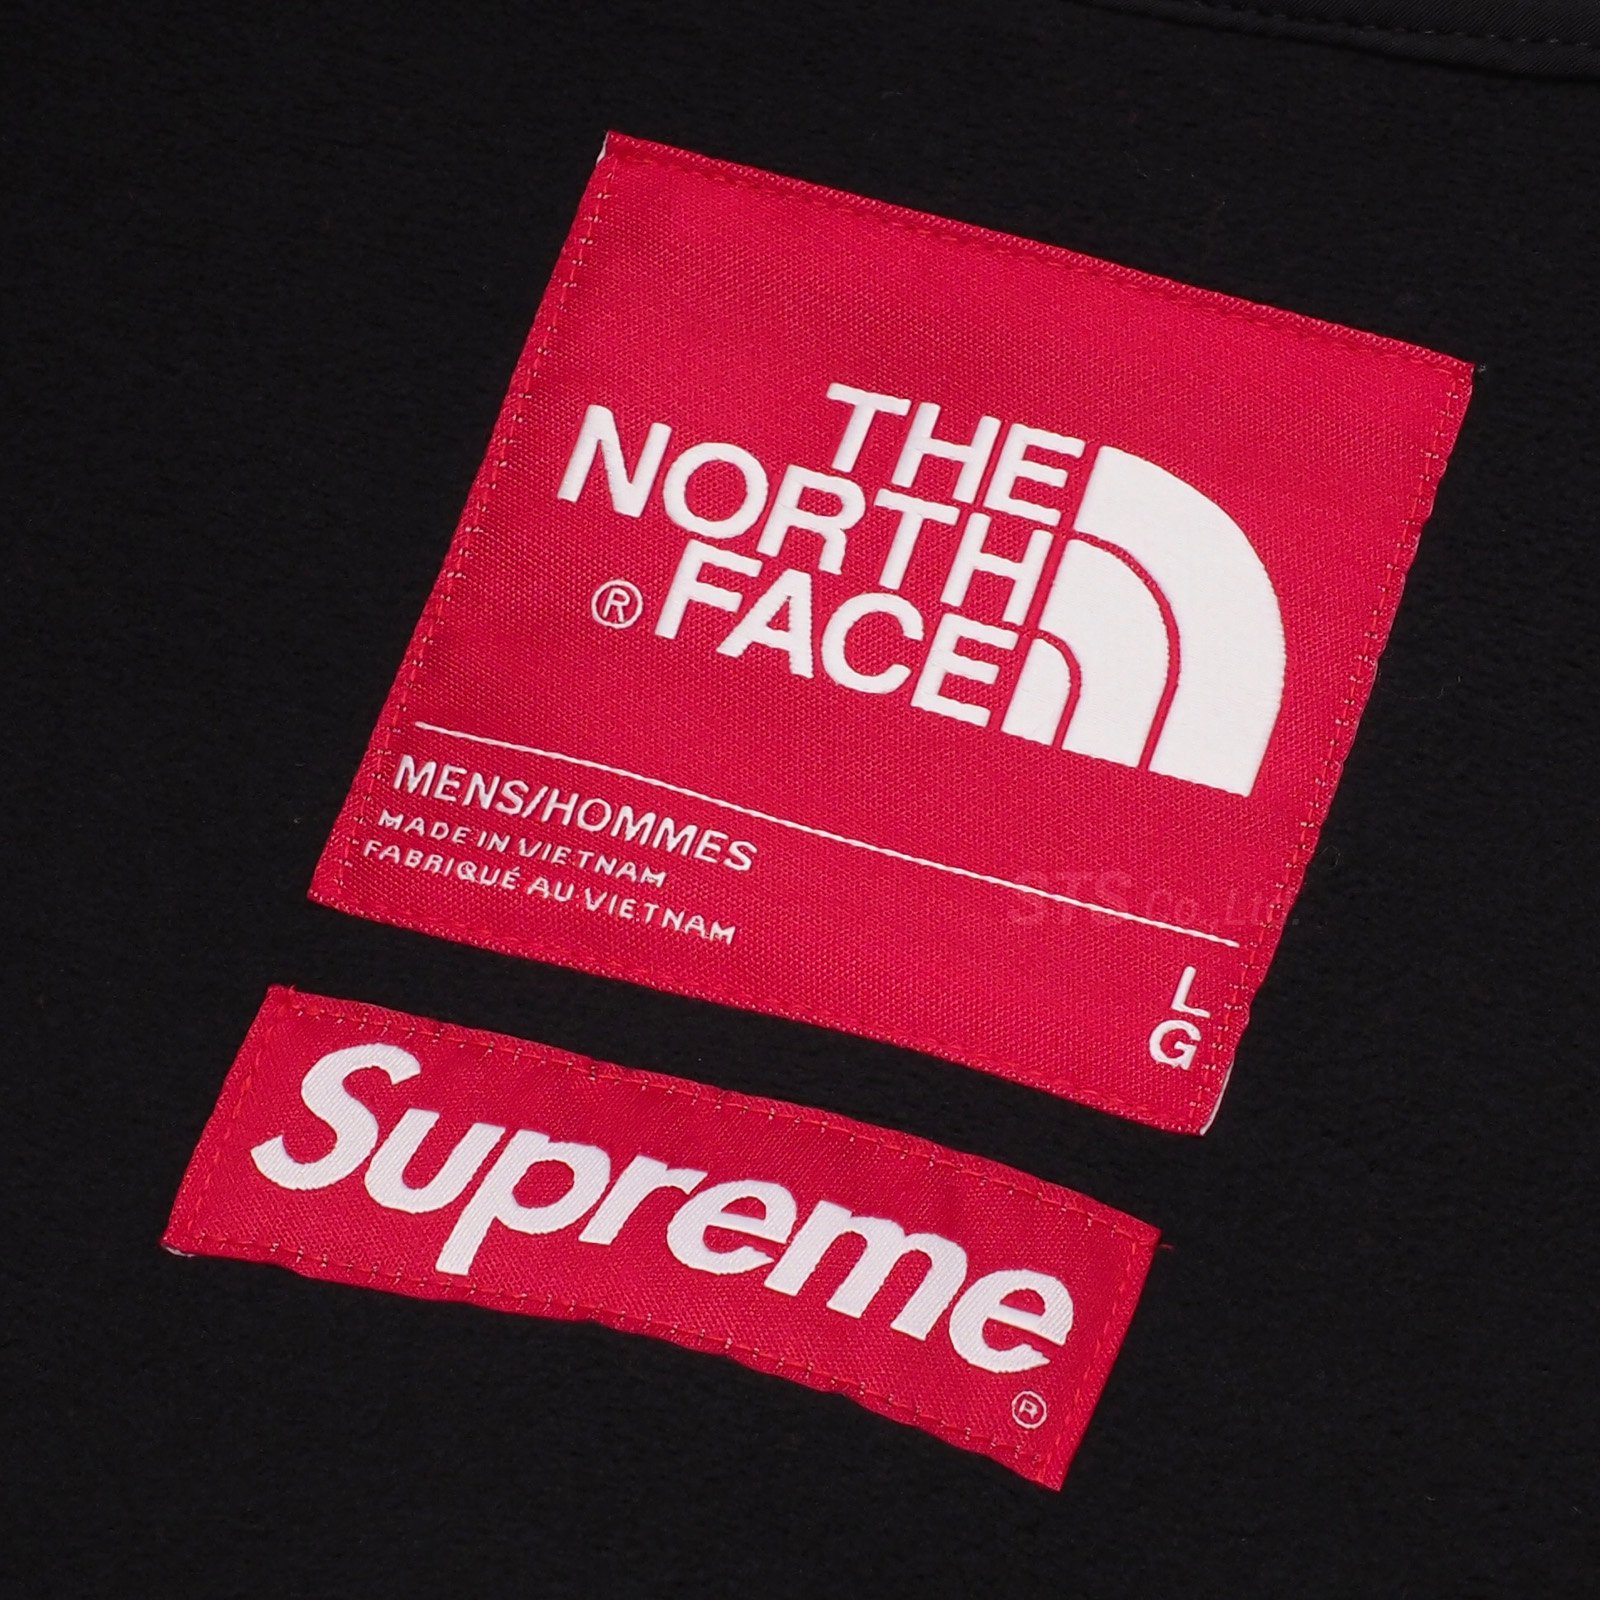 Supreme/The North Face S Logo Hooded Fleece Jacket - UG.SHAFT